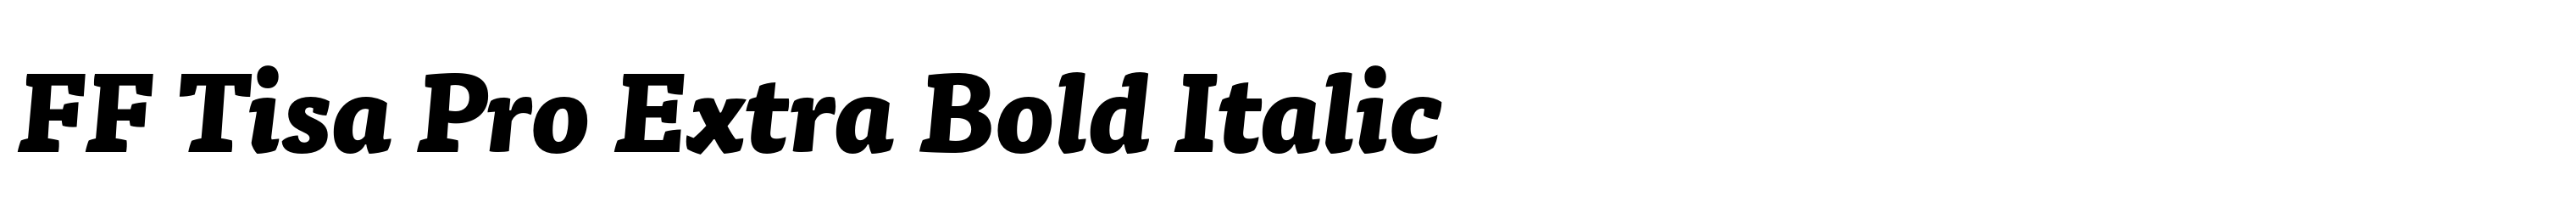 FF Tisa Pro Extra Bold Italic